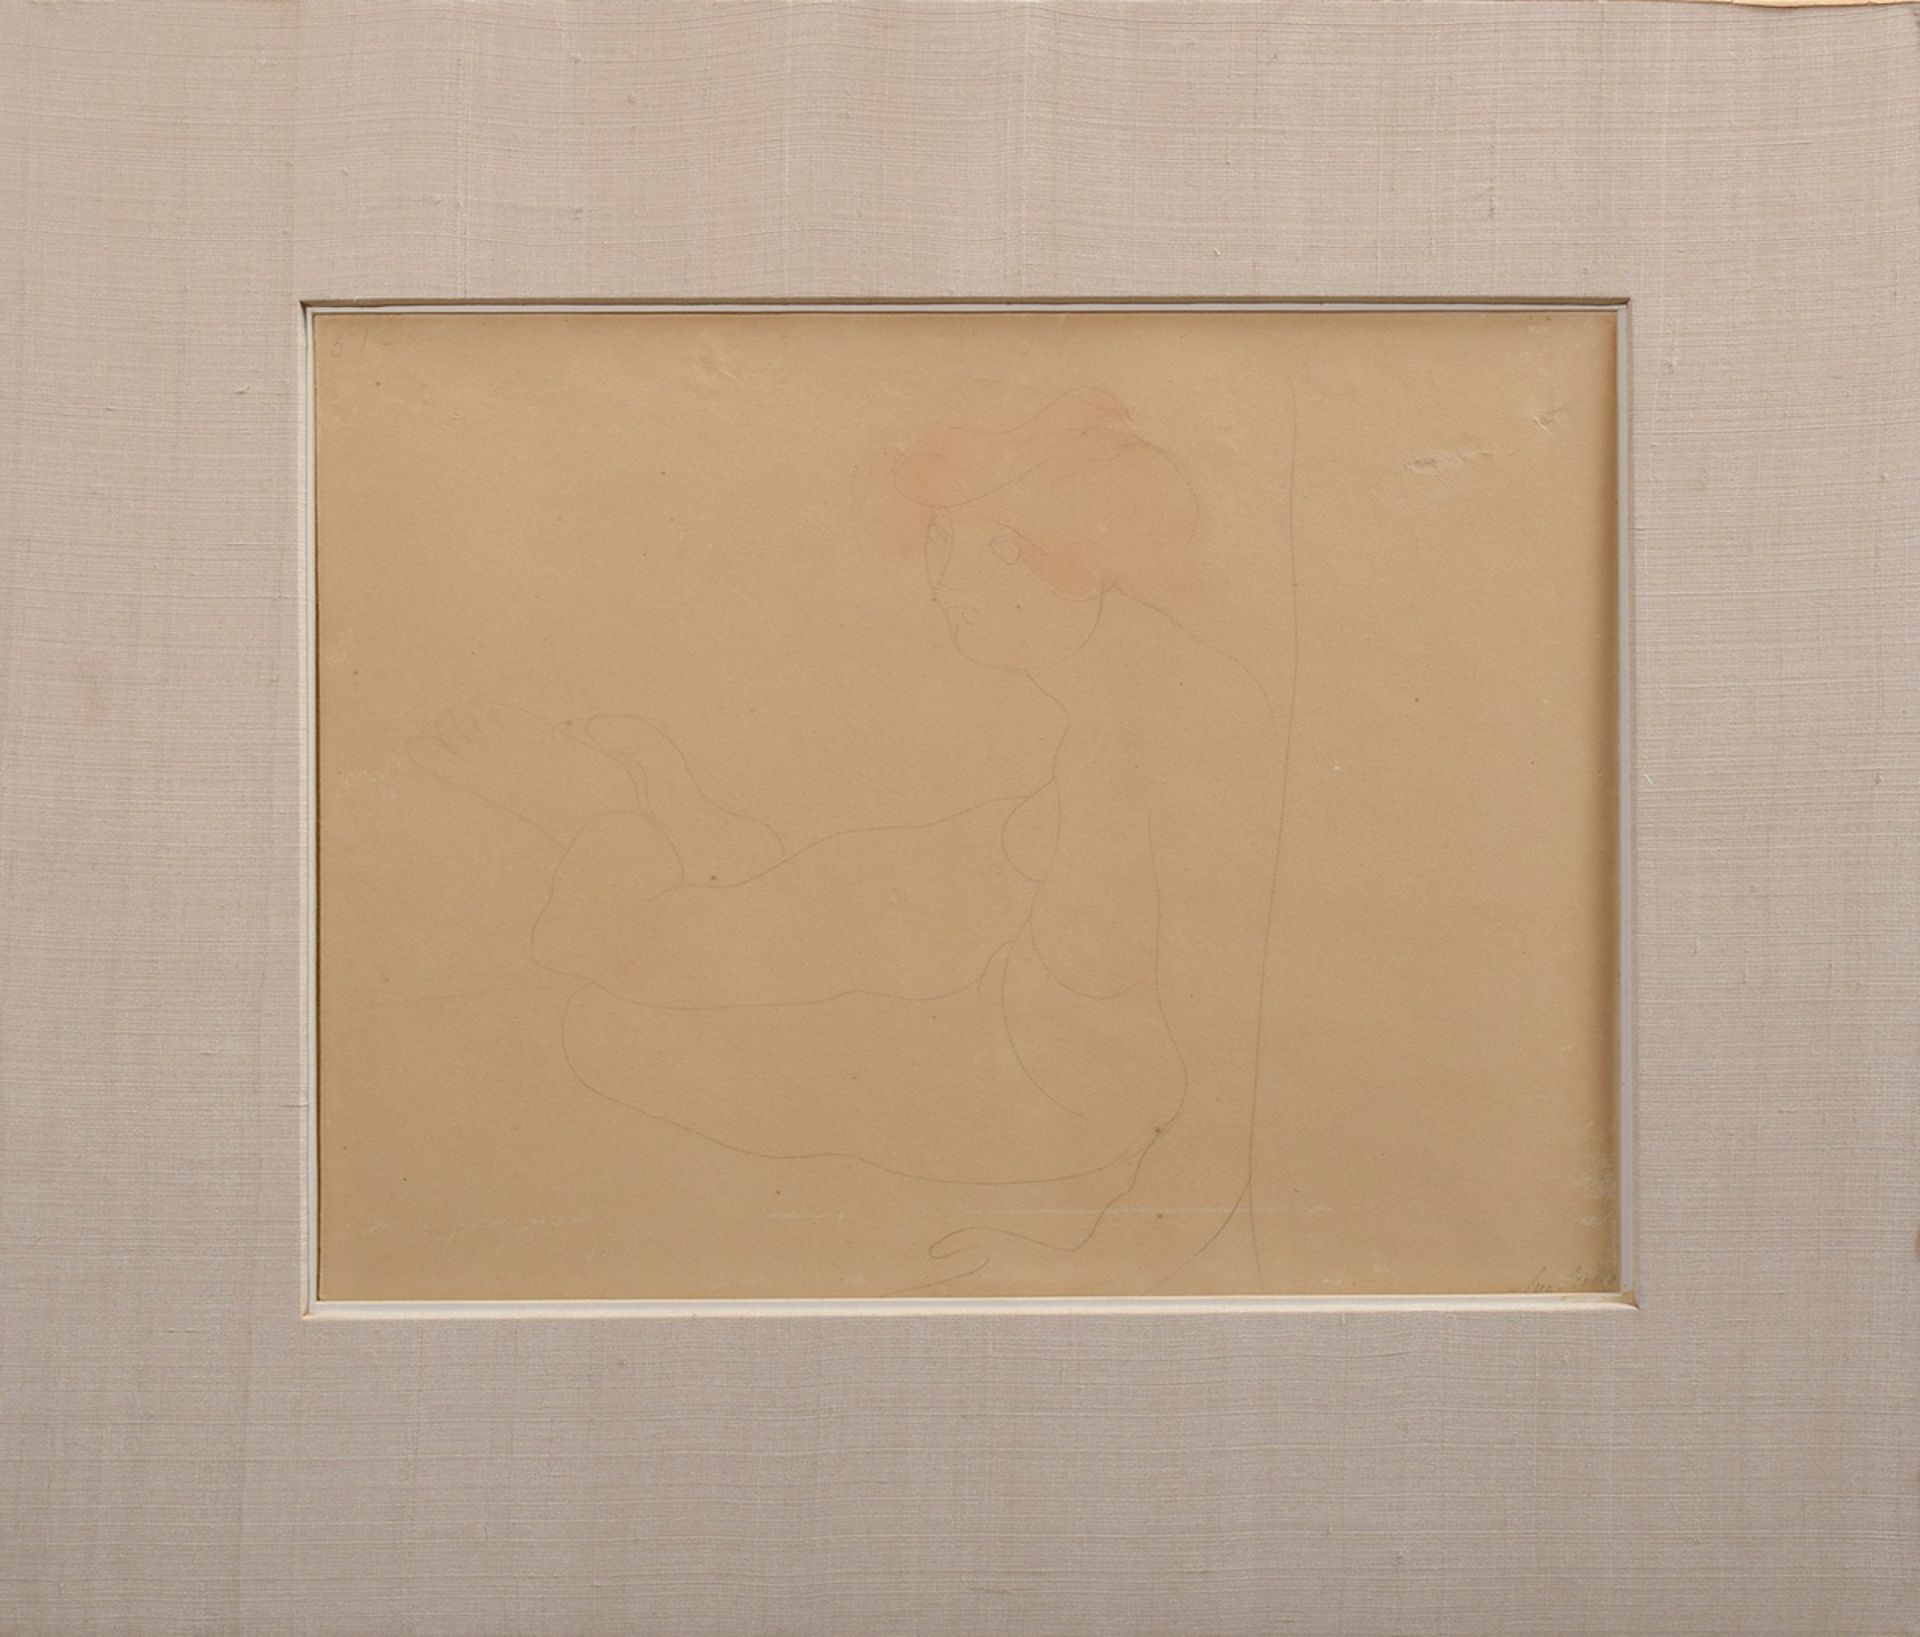 Rodin, Auguste (1840-1917) "Sitzender Akt", Blei | Rodin, Auguste (1840-1917) "Sitting Nude", penci - Image 2 of 8